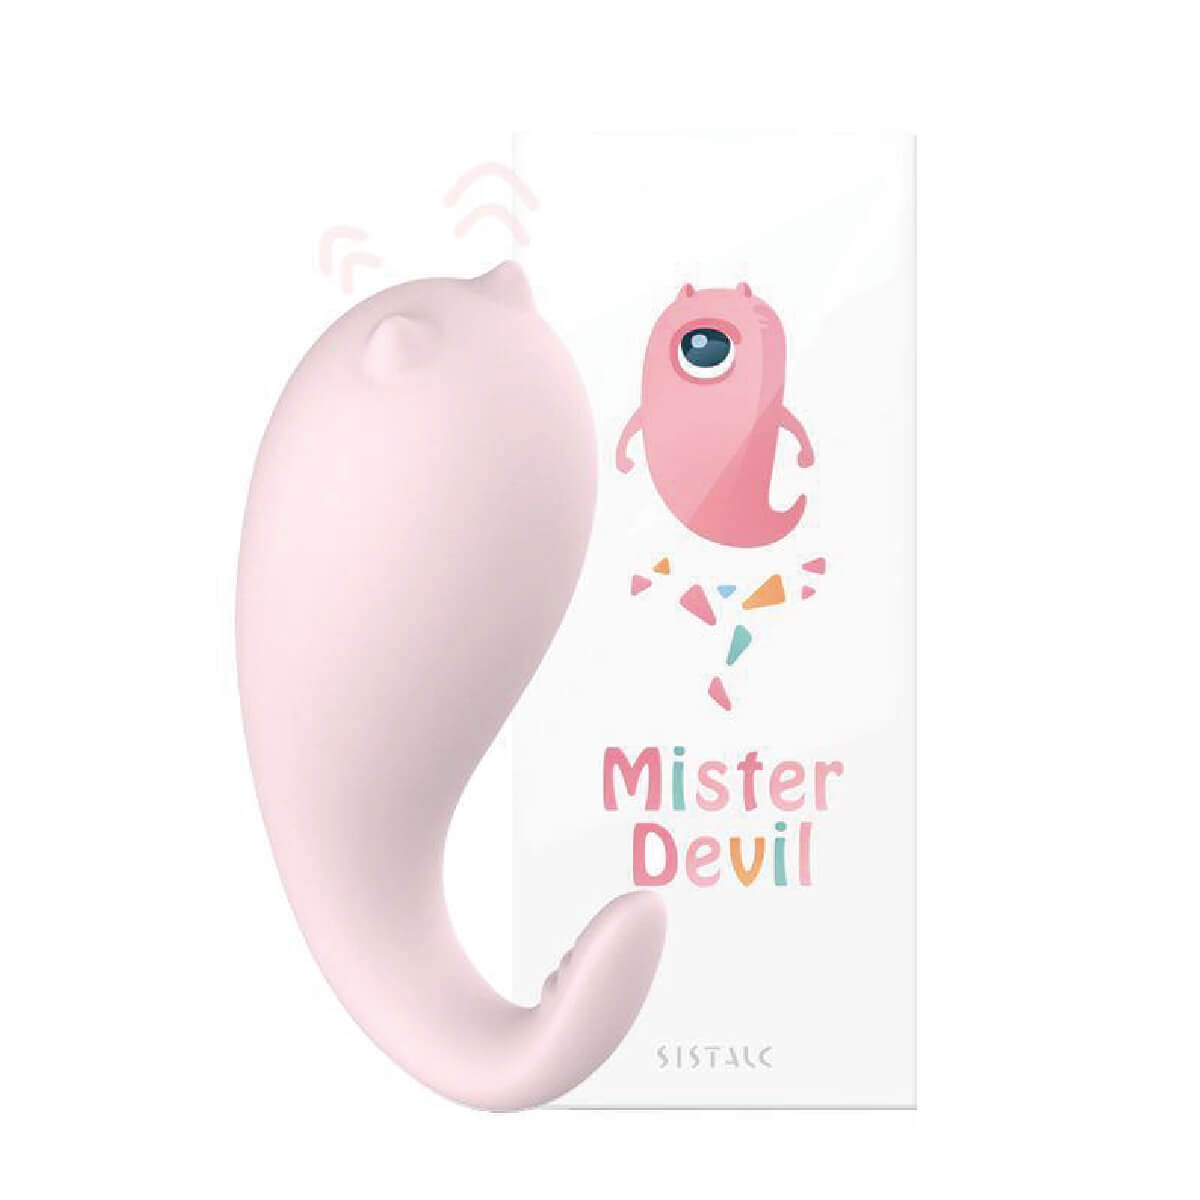 The devilishly good egg vibrator Mister Devil by Monster Pub - Product image